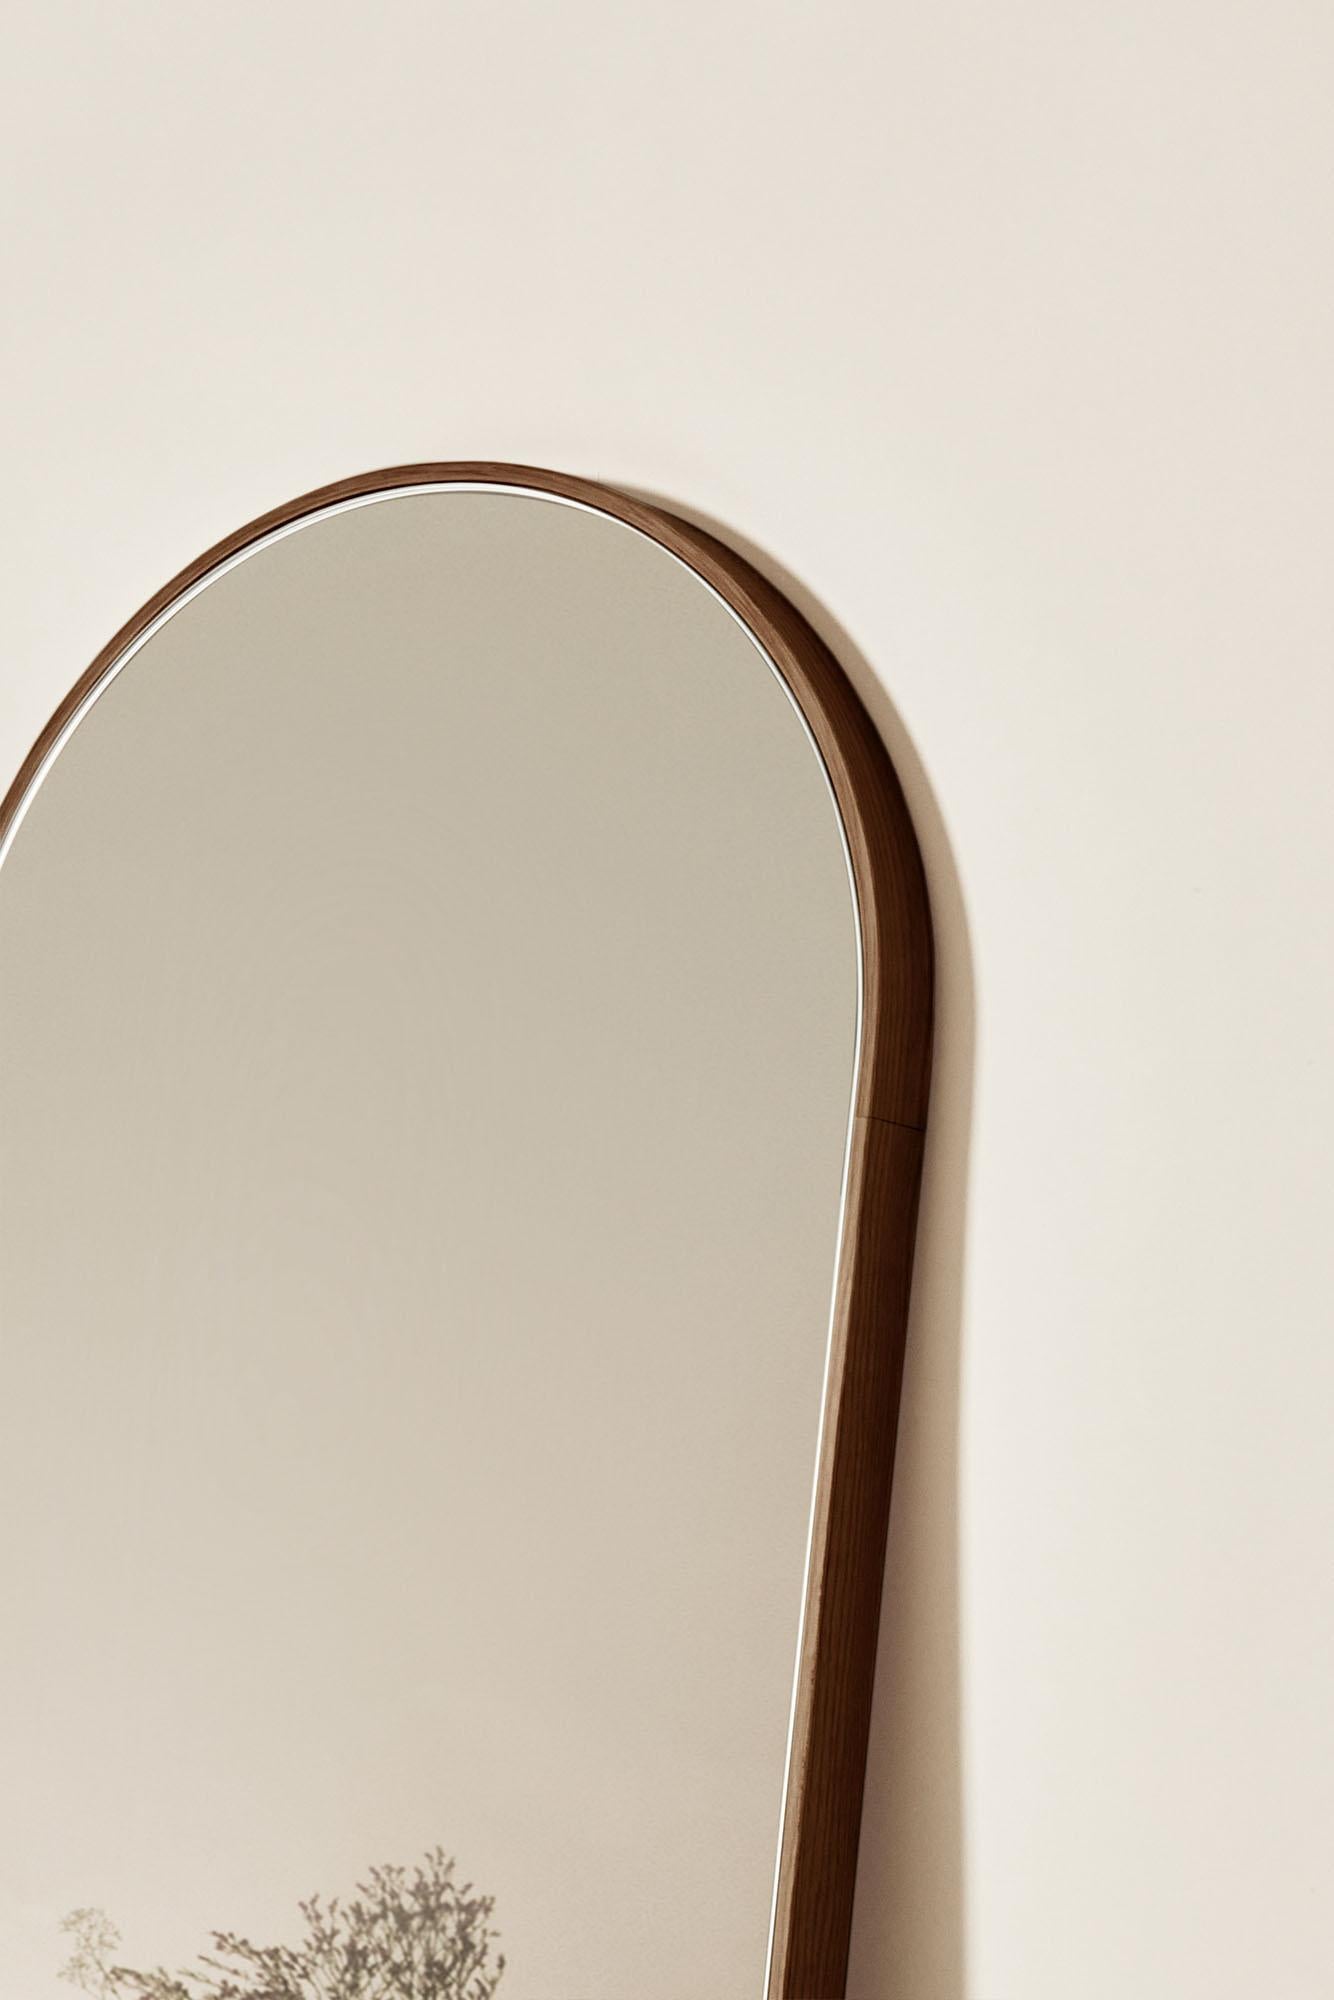 Italian Tutto Sesto Solid Wood Oval Mirror, Ash in Brown Finish, Contemporary For Sale